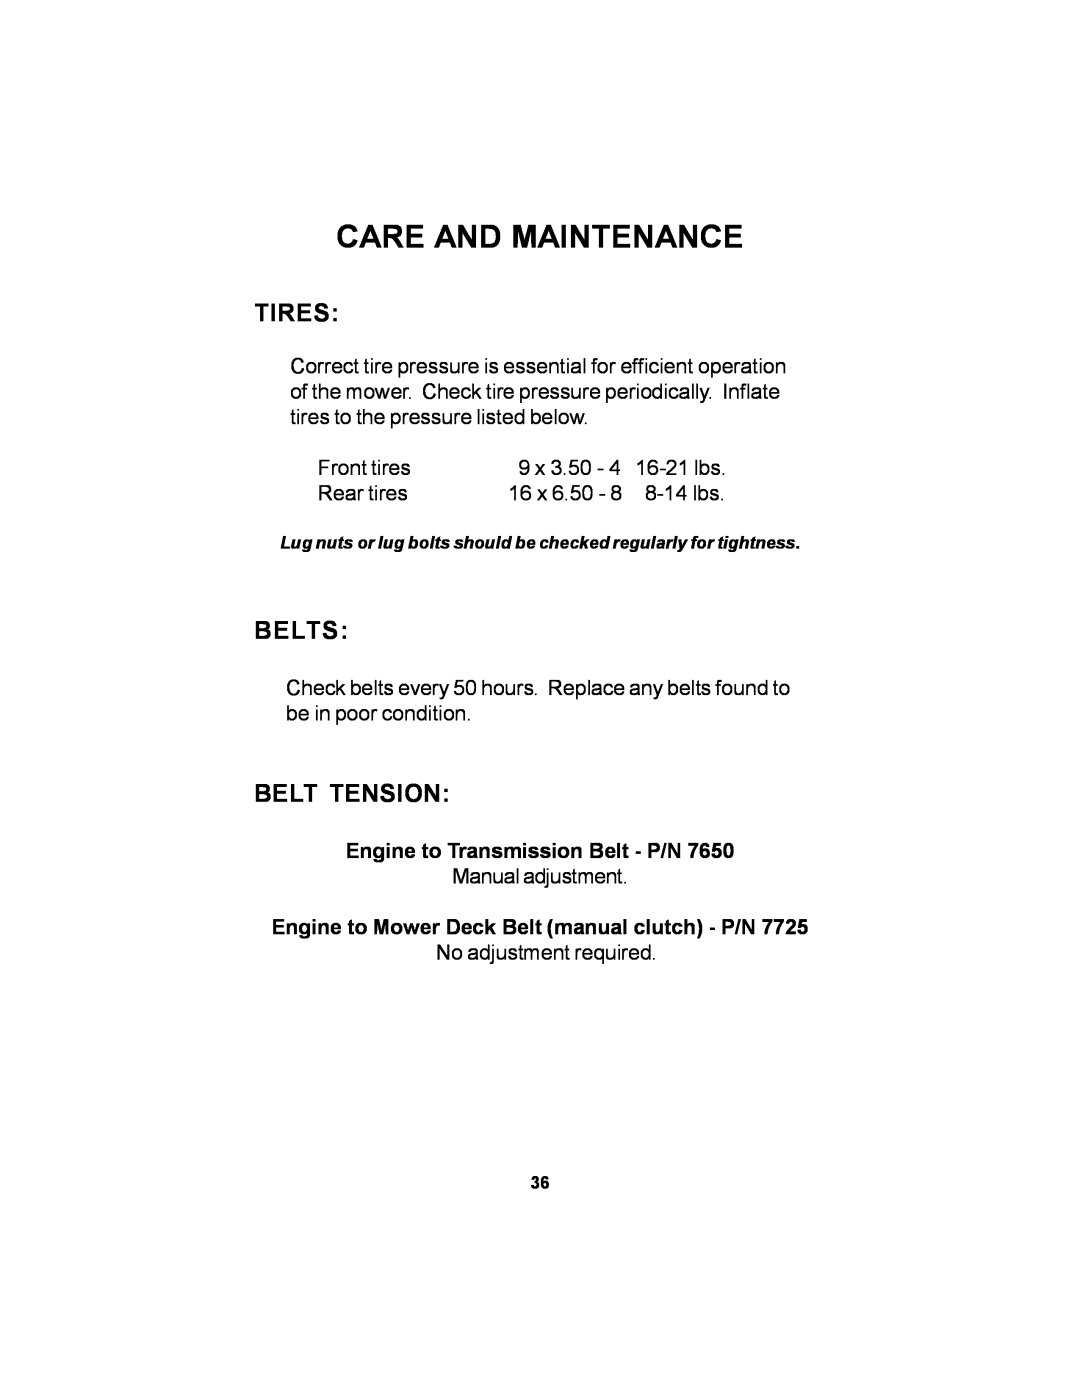 Dixon 14295-1005 manual Tires, Belts, Belt Tension, Care And Maintenance, Engine to Transmission Belt - P/N 